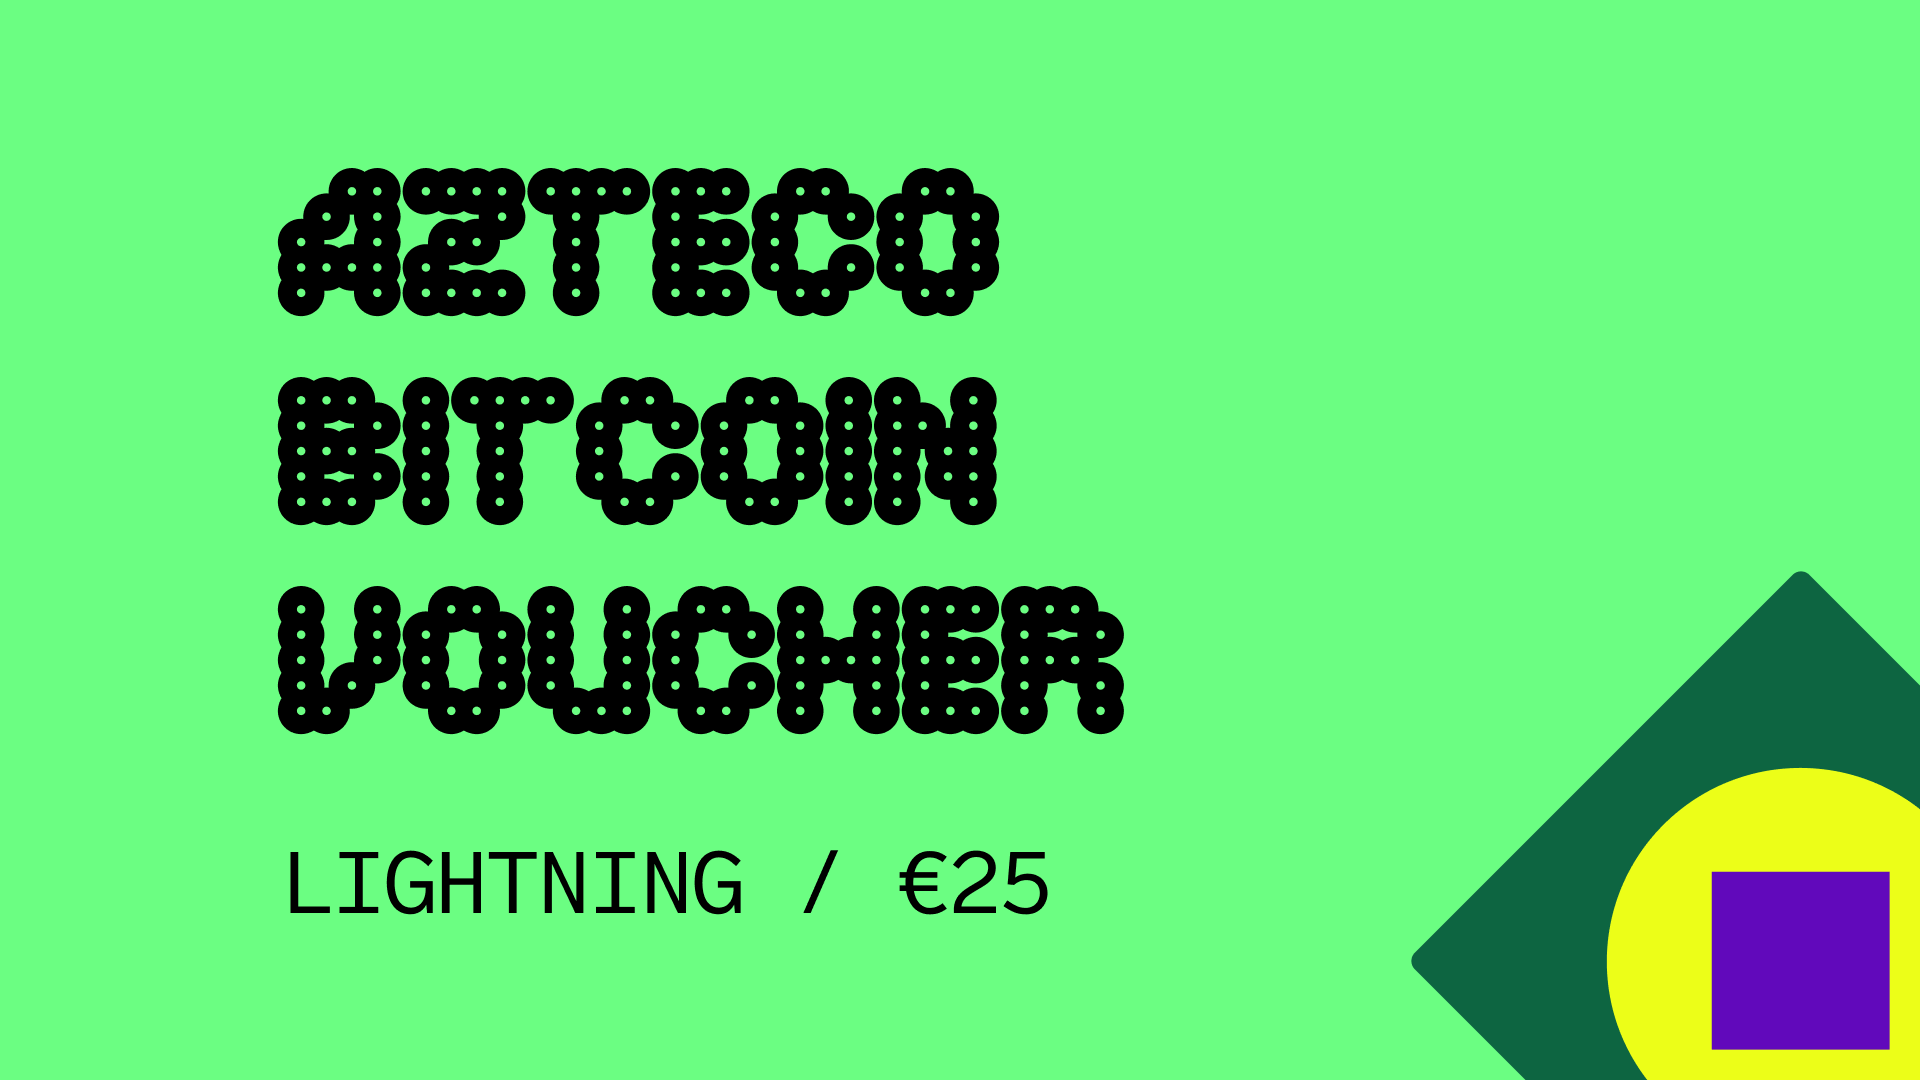 Azteco Bitcoin Lighting €25 Voucher [USD 28.25]